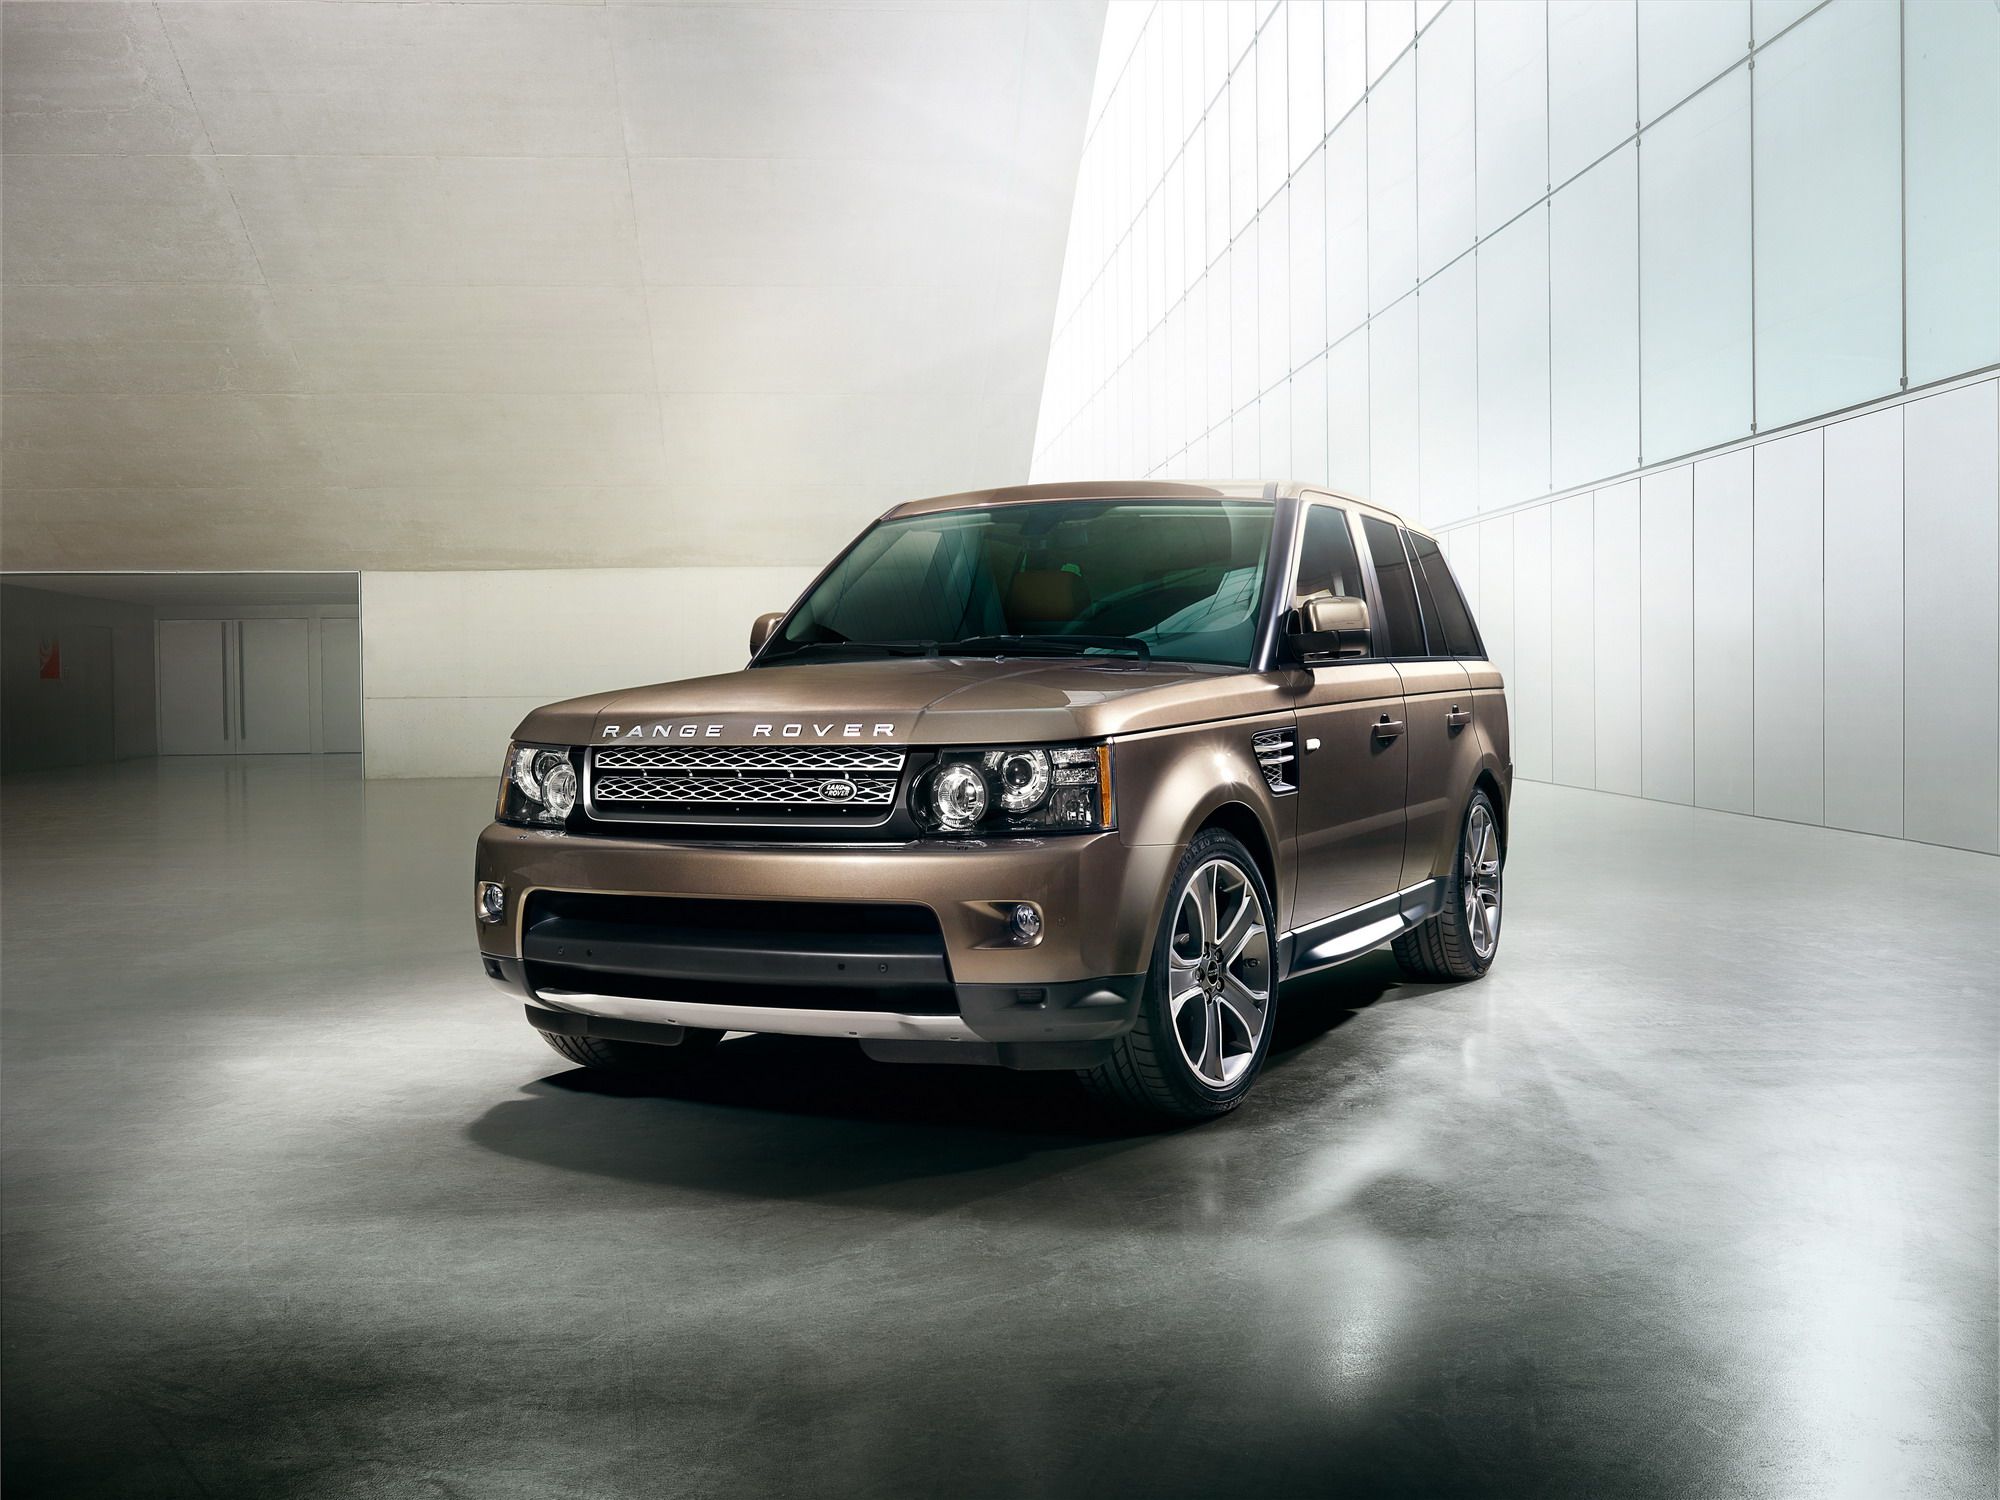 2012 Land Rover Range Rover Sport 